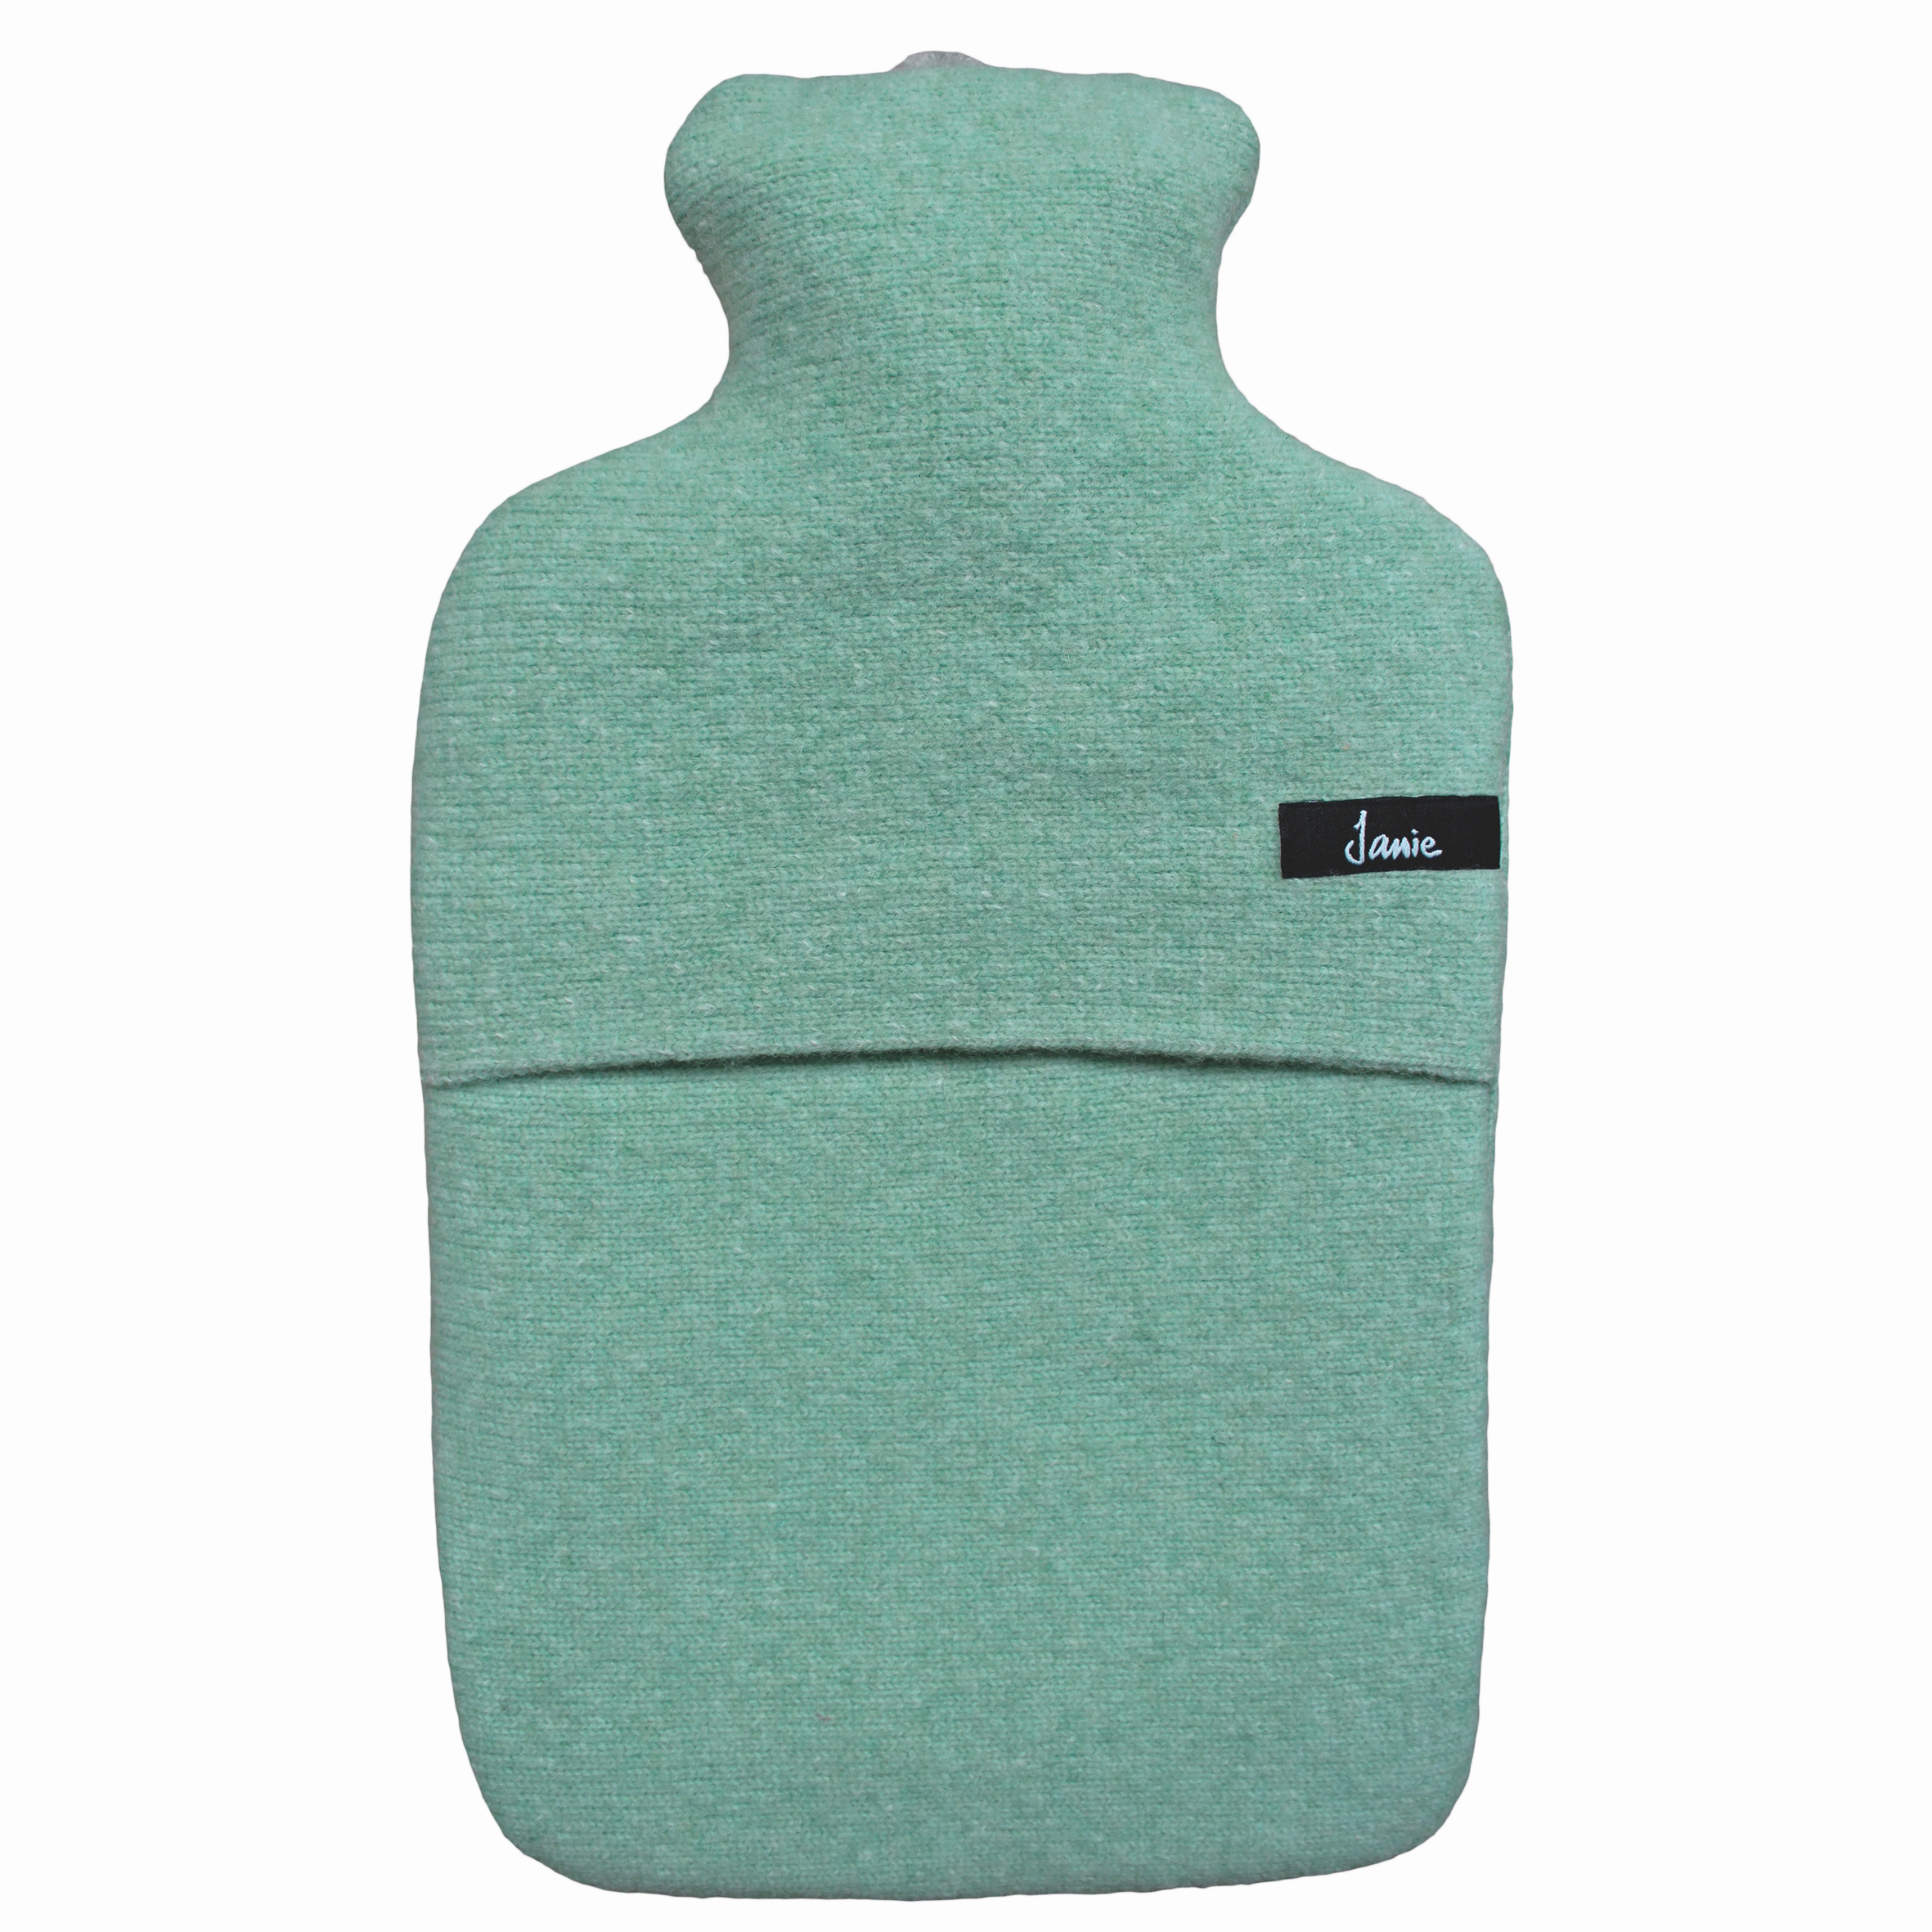 Treeline hot water bottle 2 L Jade green – Janie Knitted Textiles